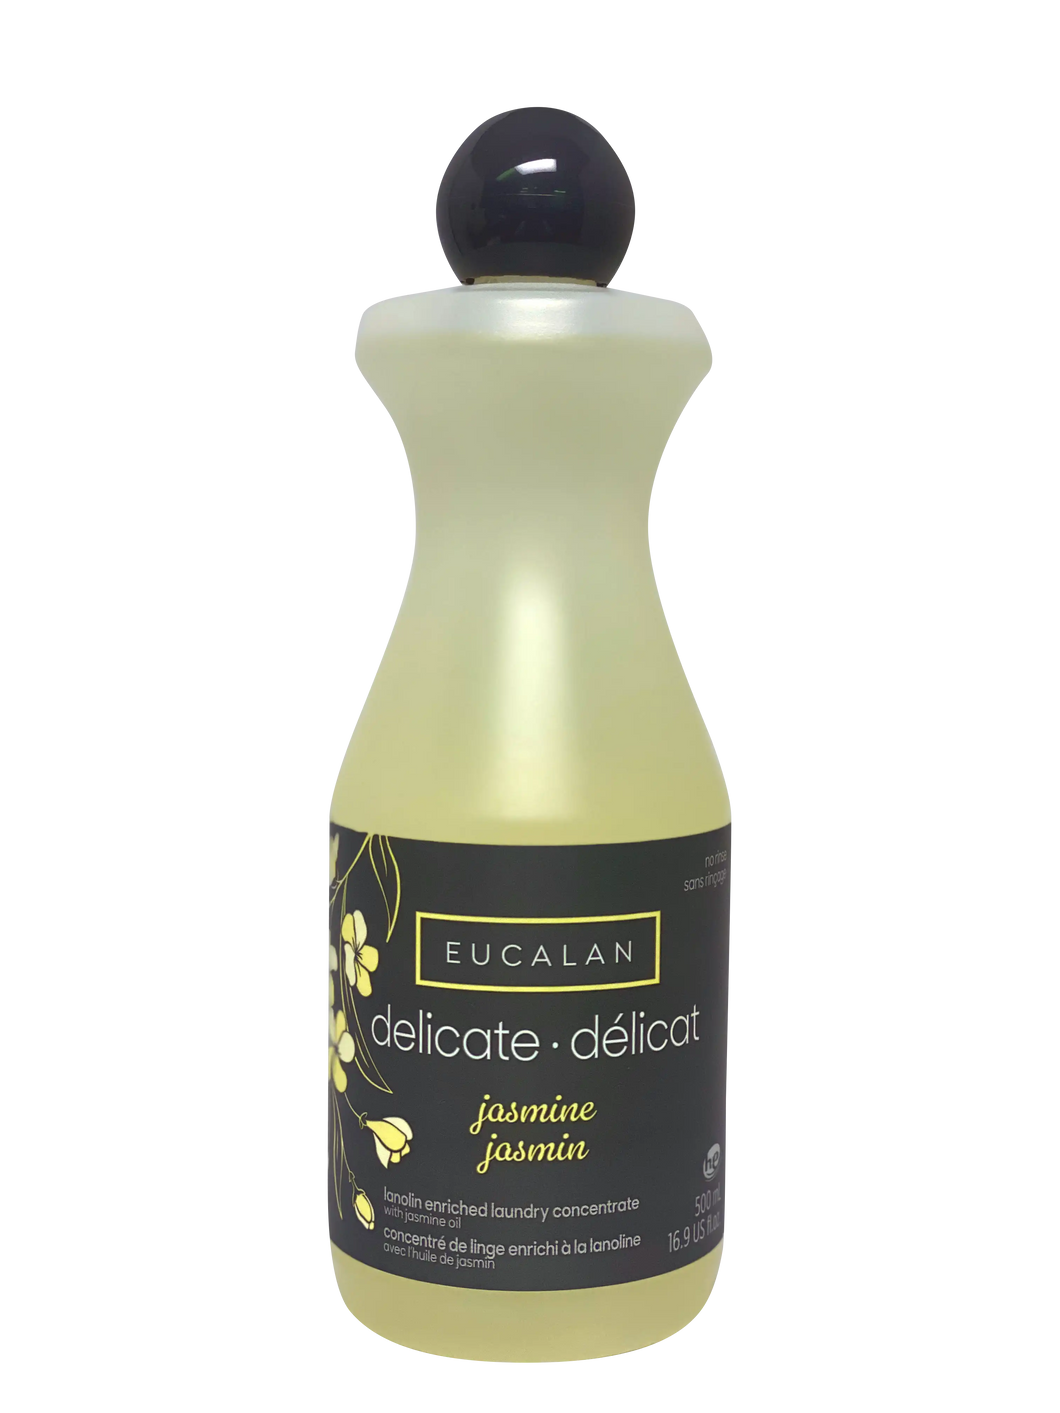 Eucalan 100 ml Wrapture (Jasmin)